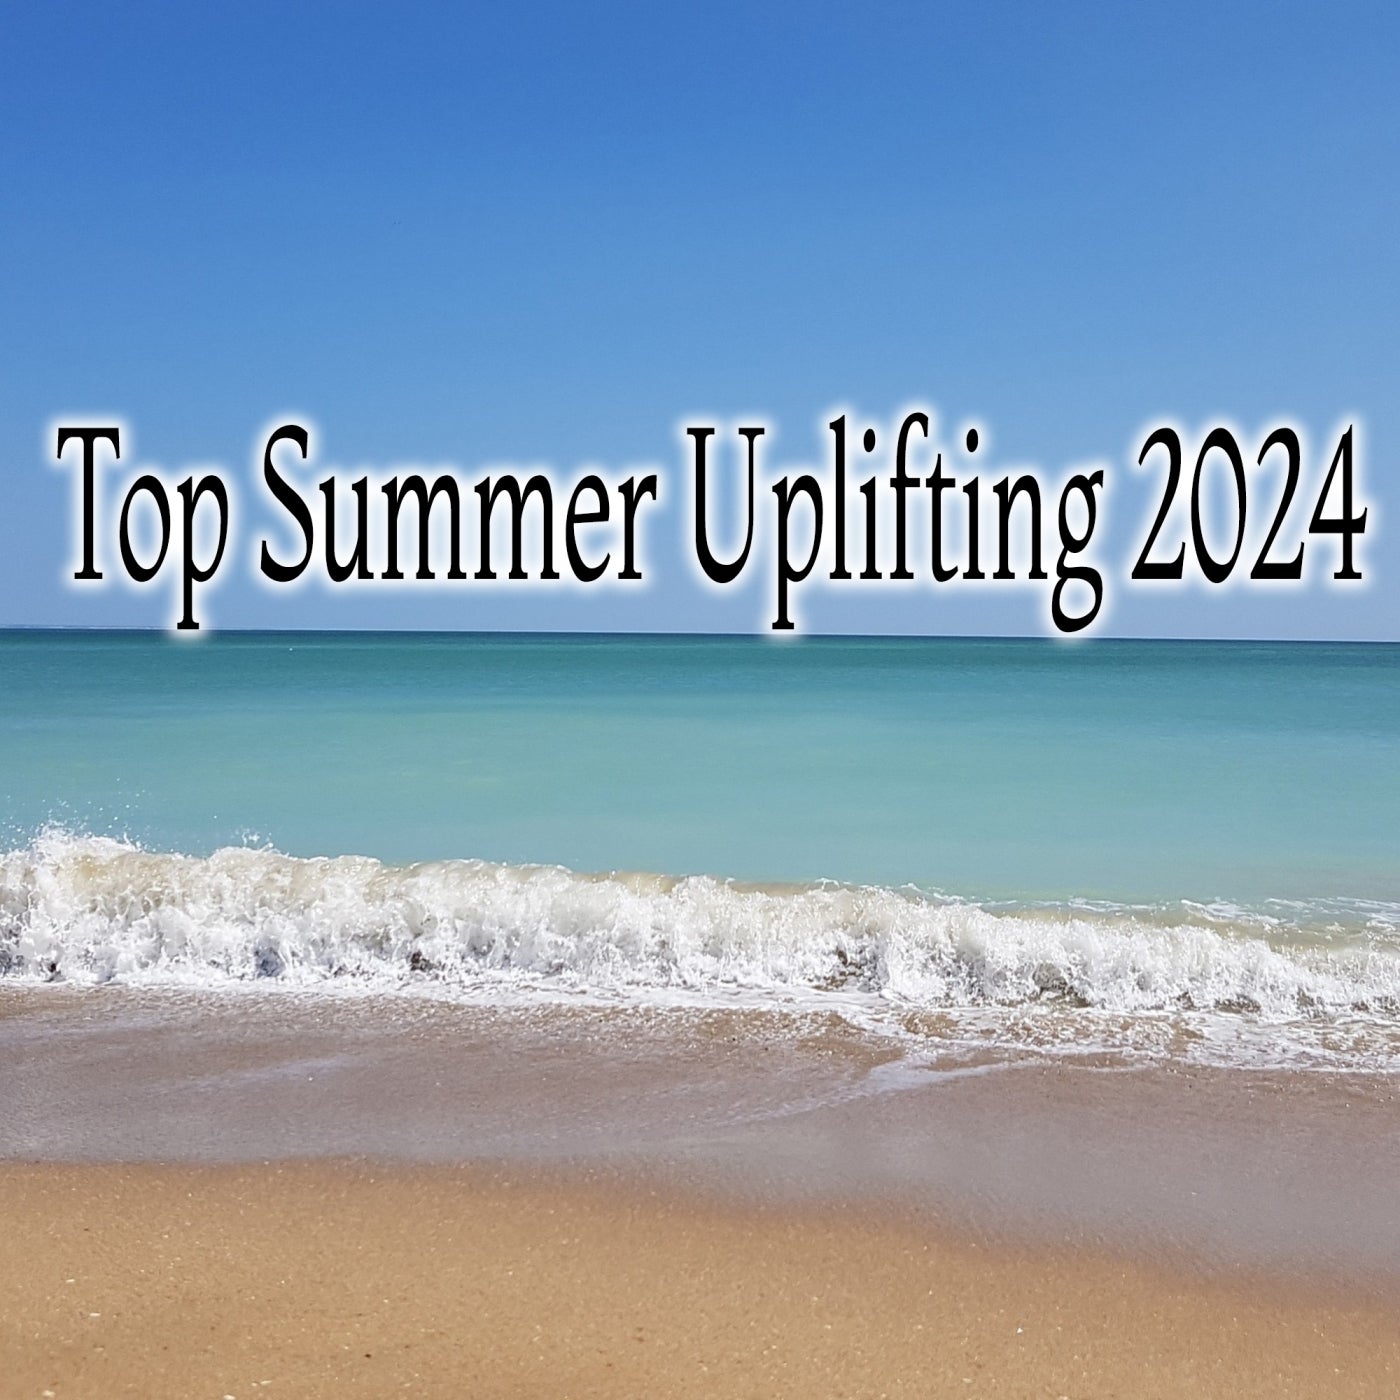 Top Summer Uplifting 2024